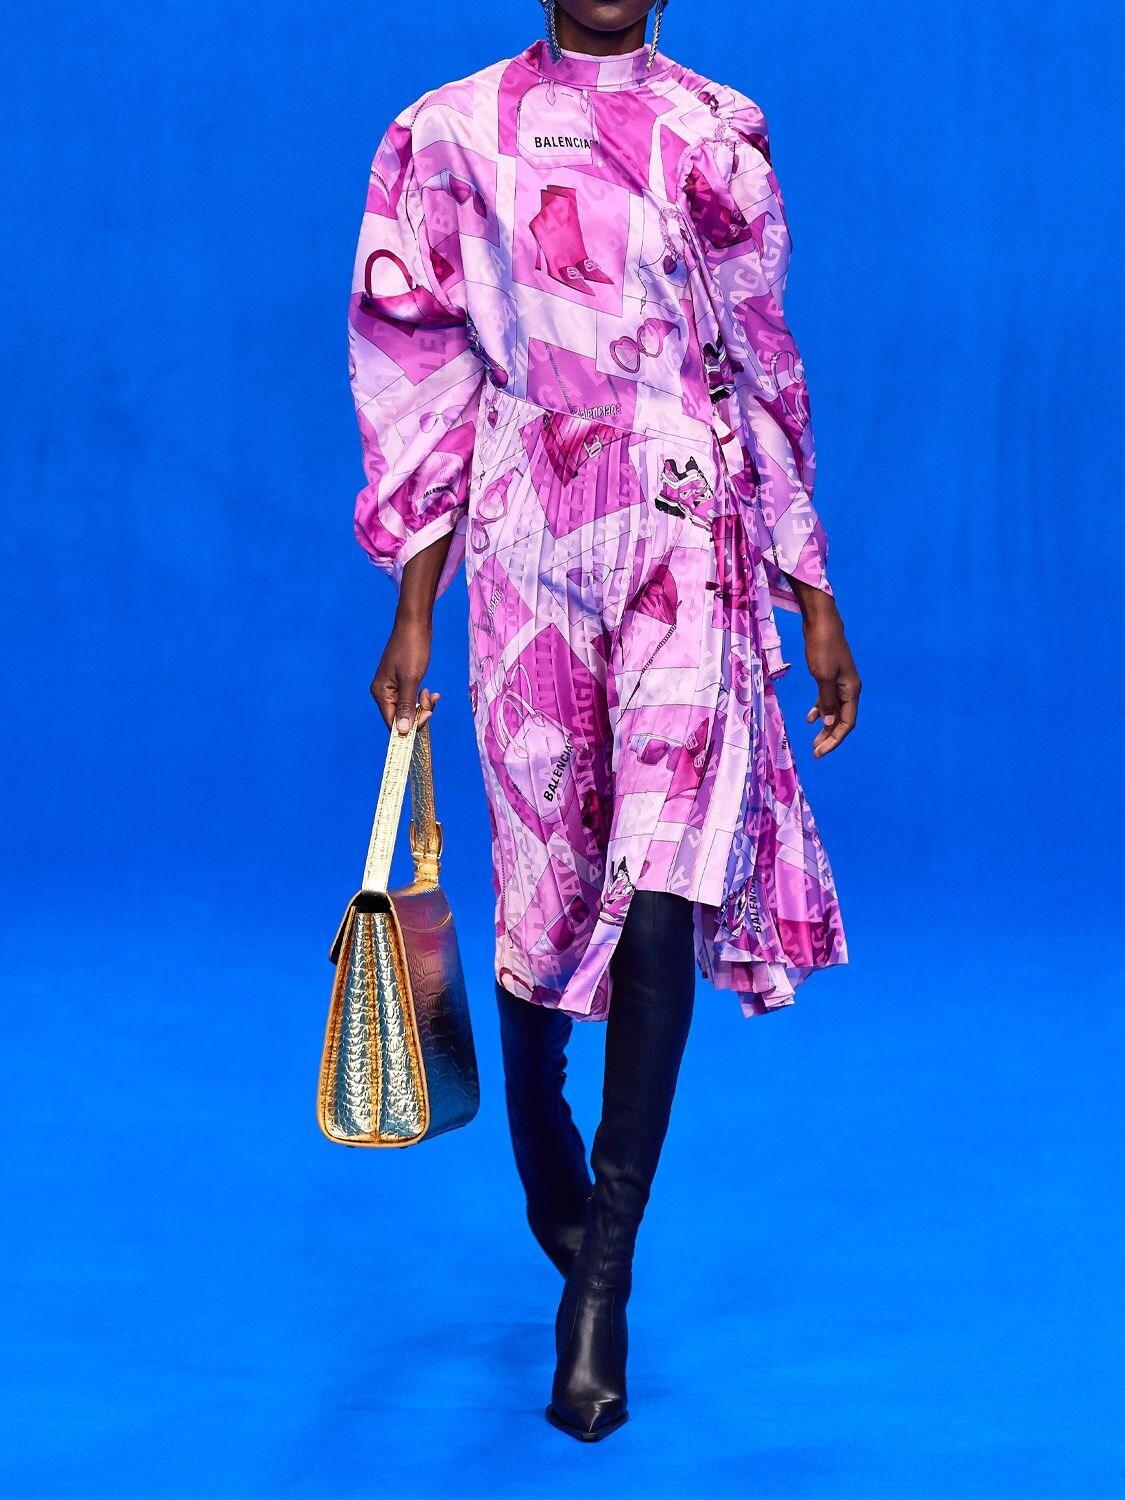 Balenciaga Asymmetric Printed Crepe Dress in Pink - Save 55% - Lyst